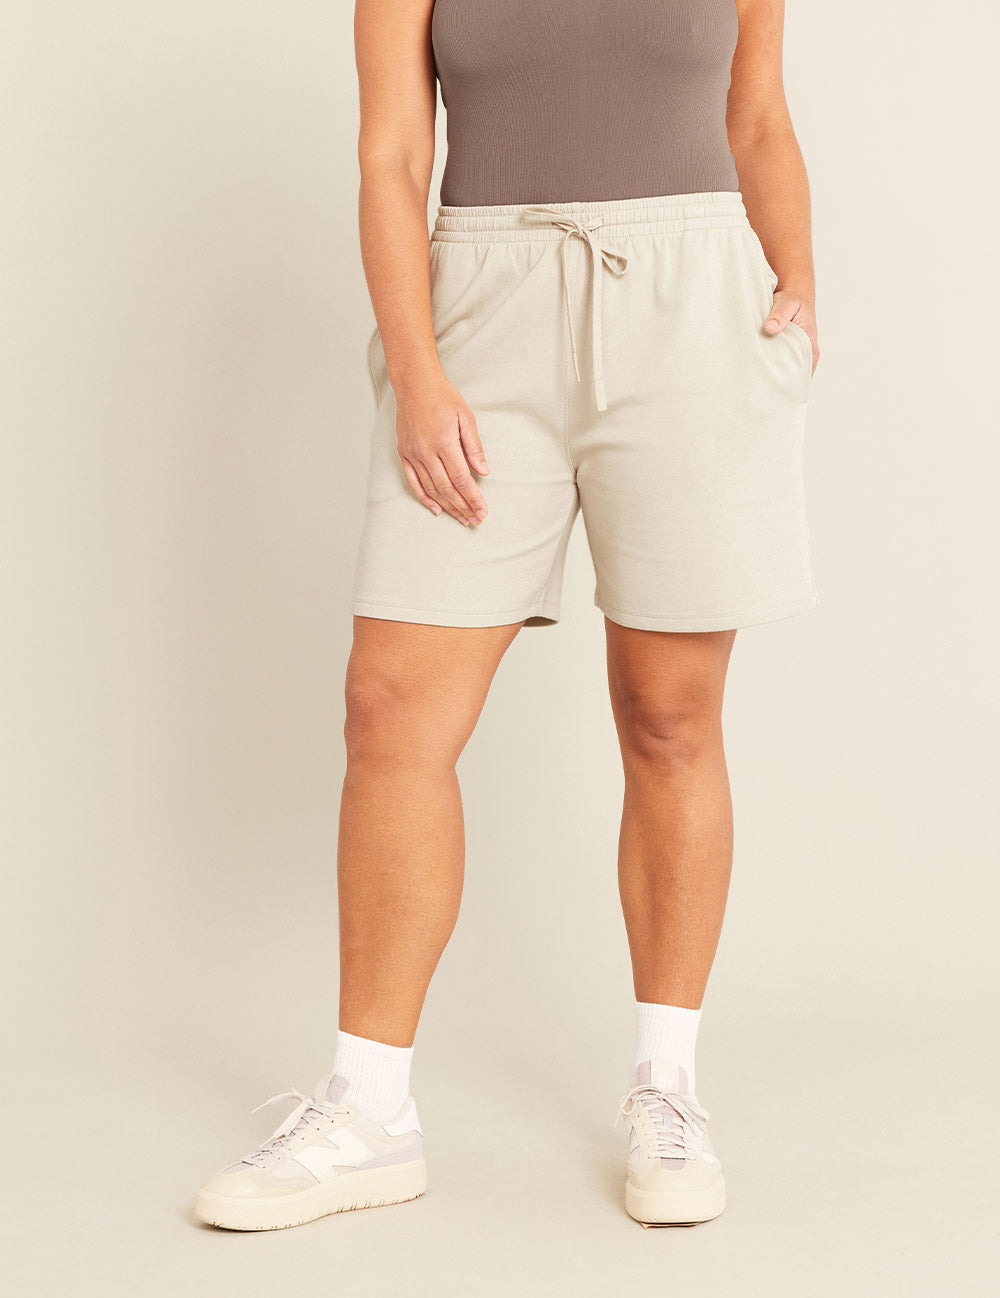 Gender-Neutral-6_-Sweat-Shorts-Sand-Female-Front.jpg